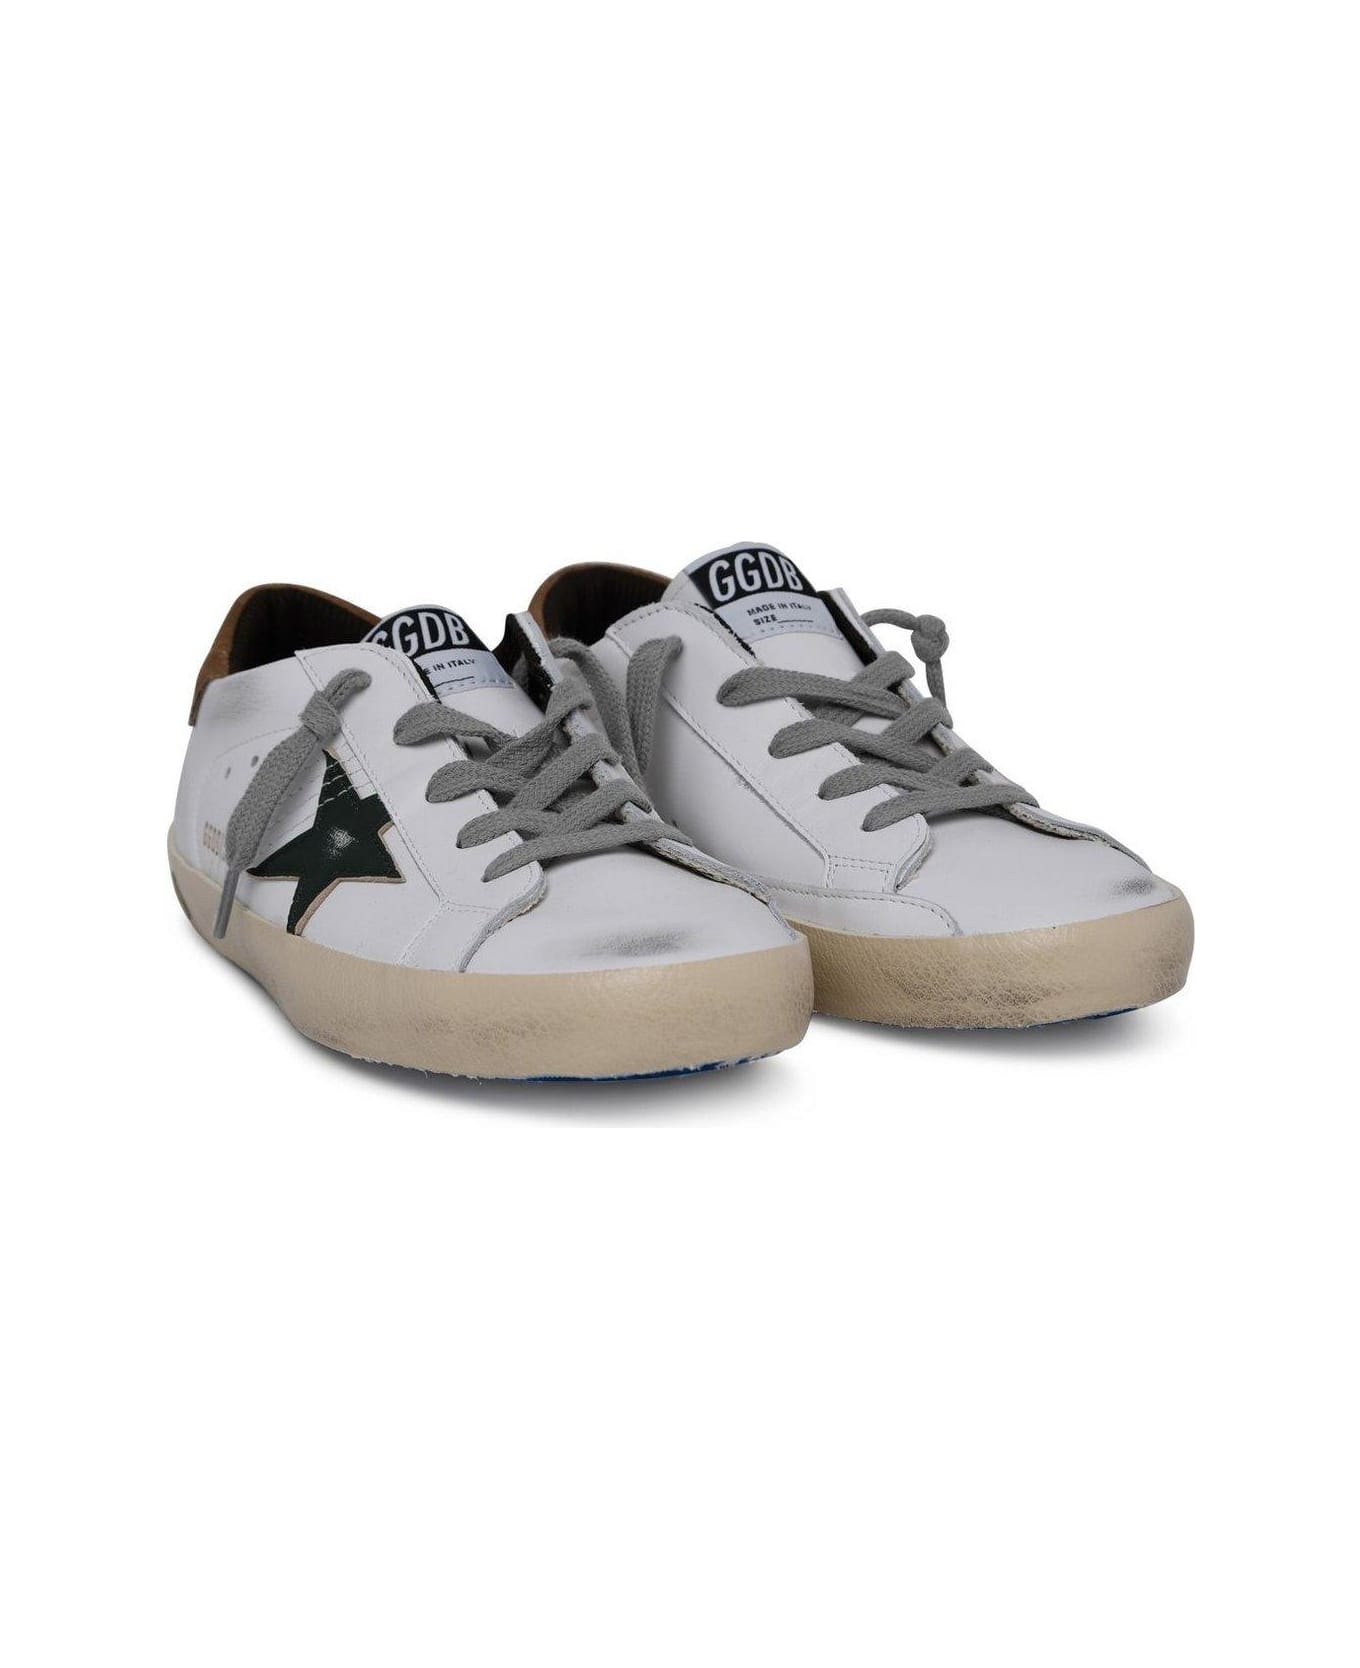 Golden Goose Super-star Low-top Sneakers - Cream/silver/ice/green